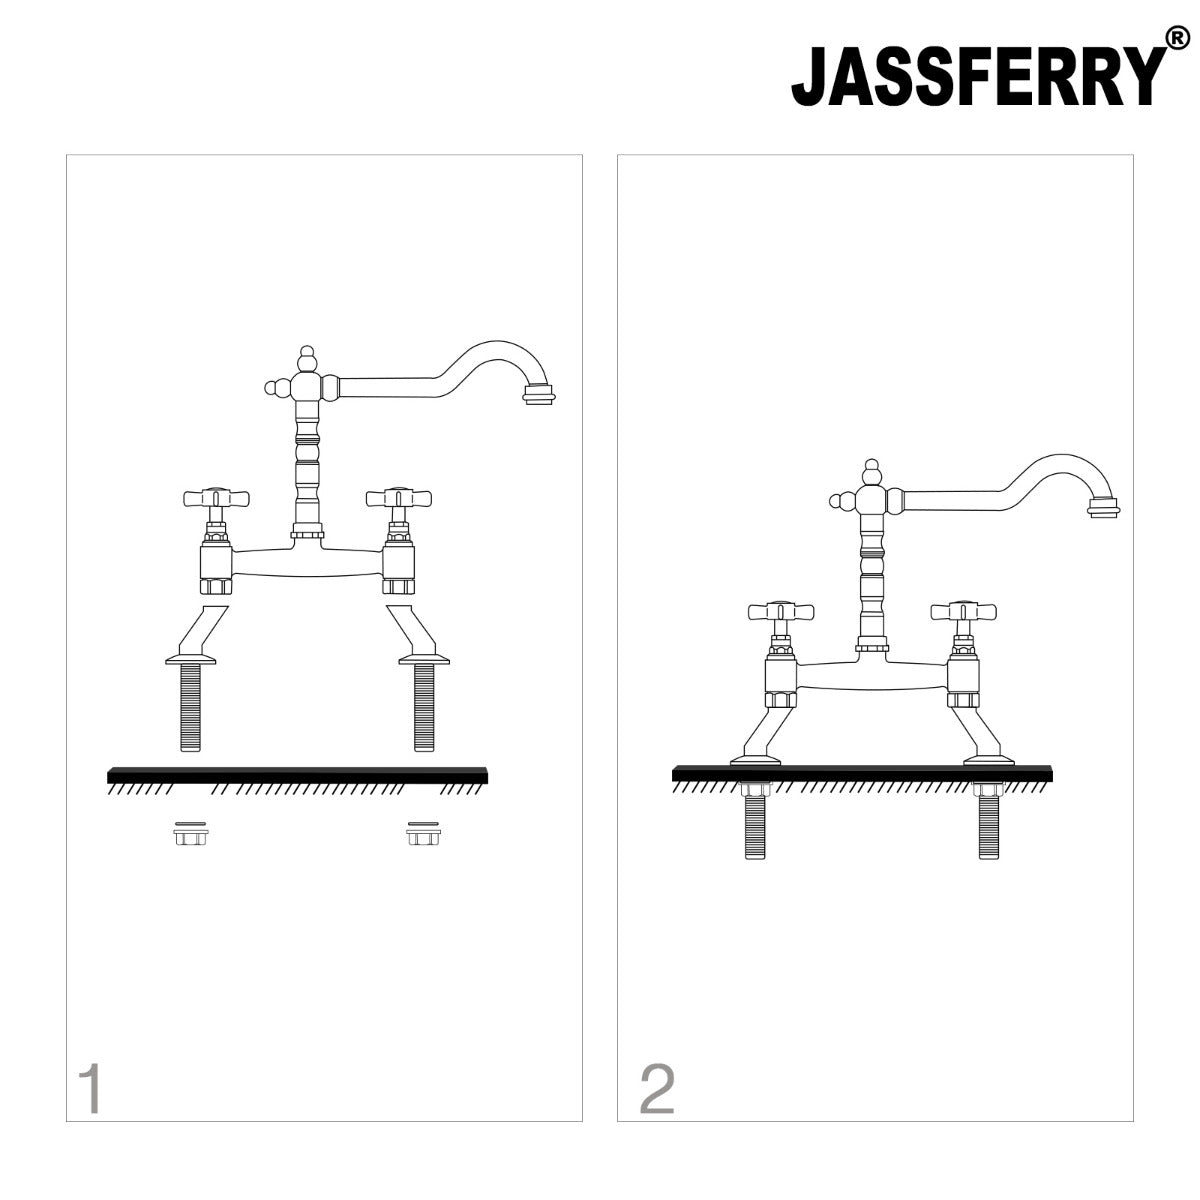 JassferryJASSFERRY Kitchen Tap 2 Hole Mixer Tap with Swivel Spout Traditional RenaissanceKitchen taps